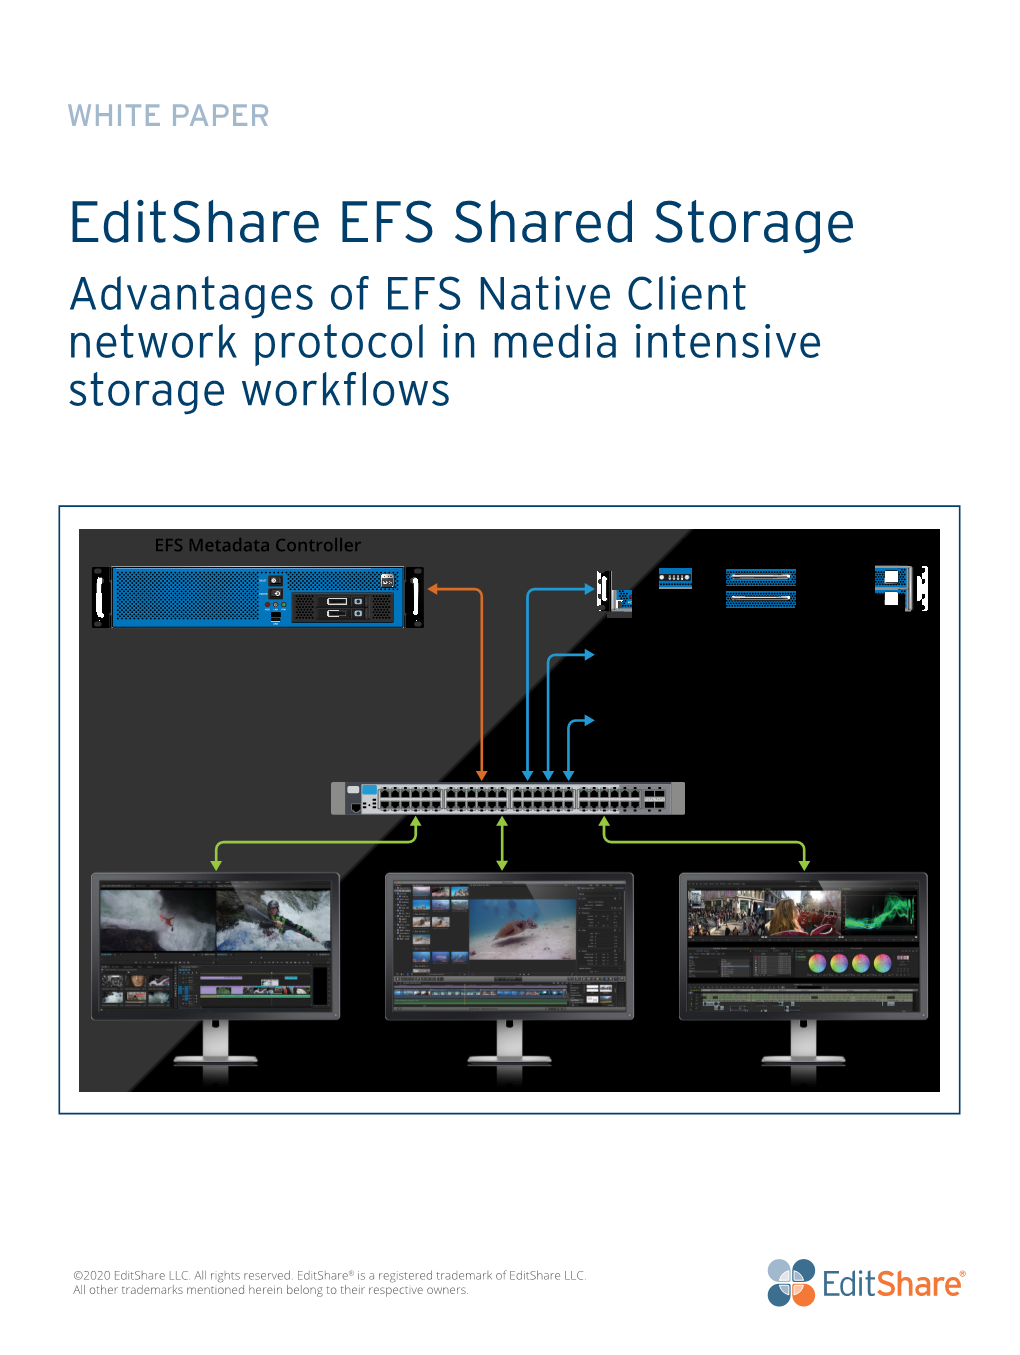 Editshare EFS Shared Storage Advantages of EFS Native Client Network Protocol in Media Intensive Storage Workflows